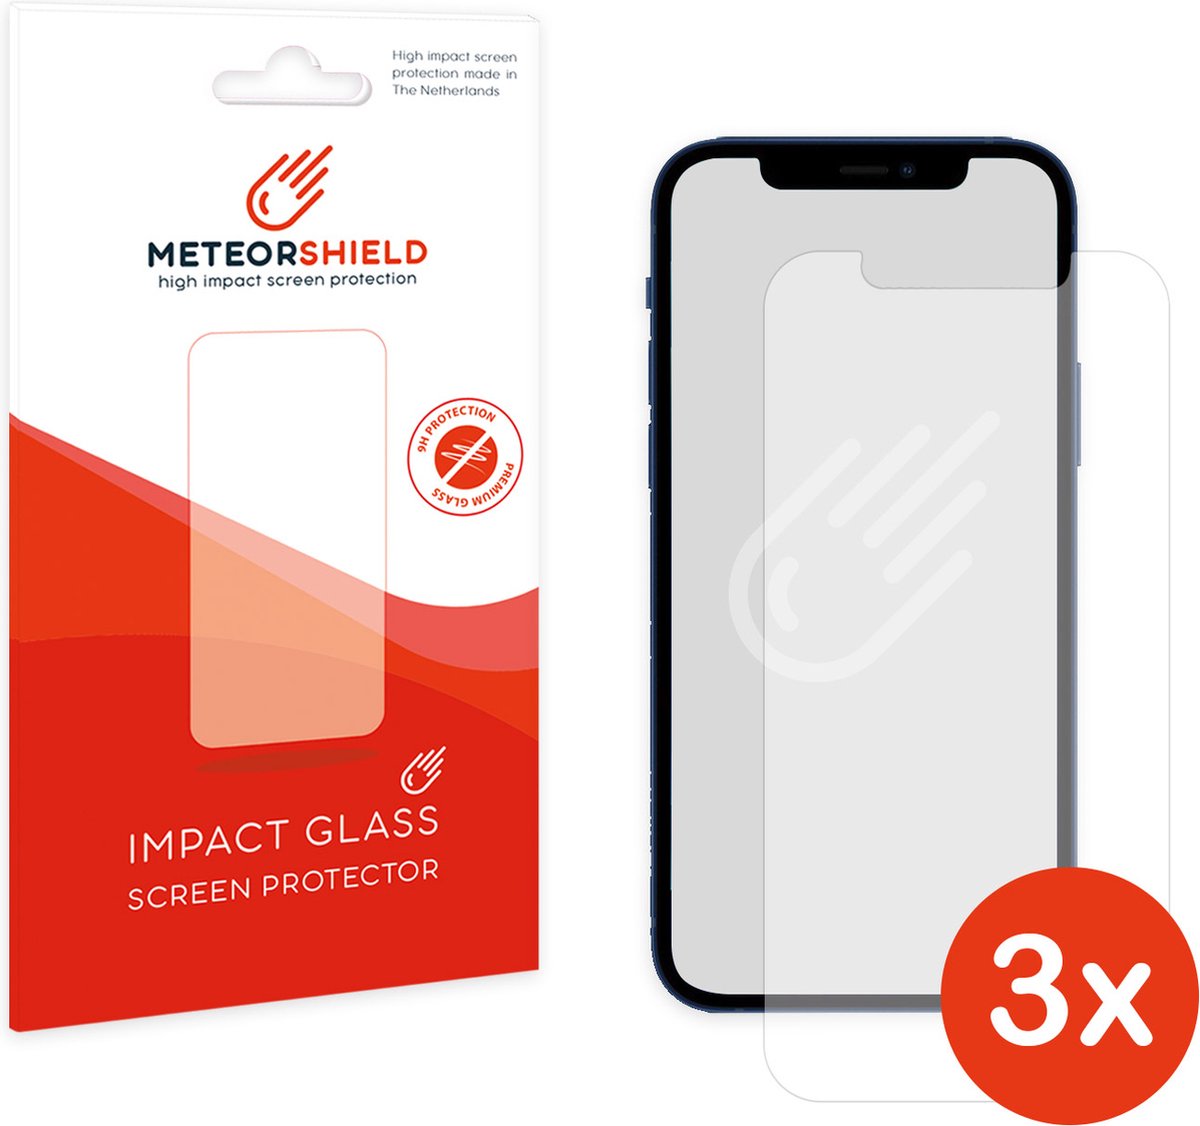 3 stuks: Meteorshield iPhone 12 Pro screenprotector - Ultra clear impact glass